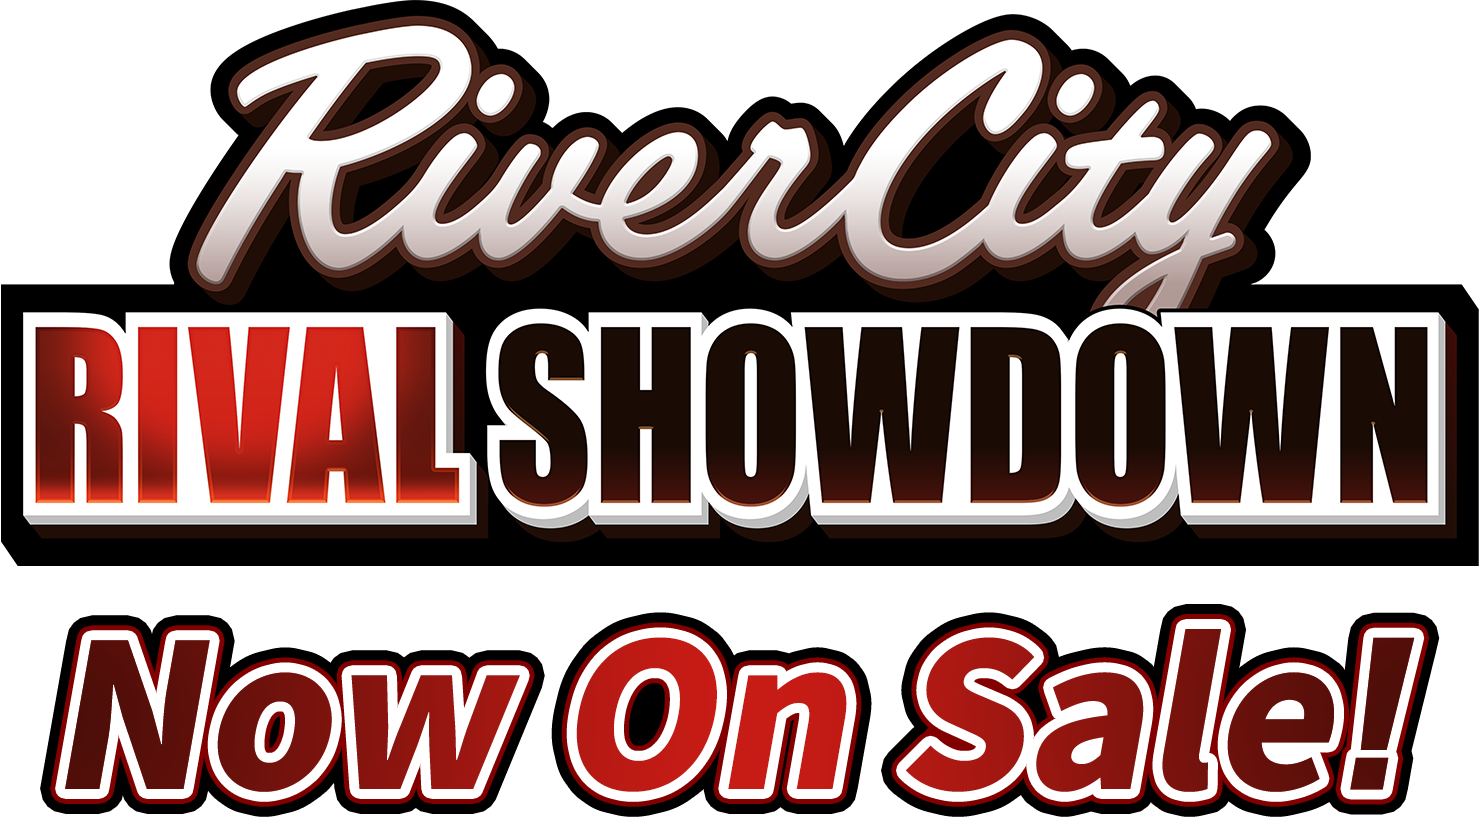 River City: Rival Showdown Now On sale!